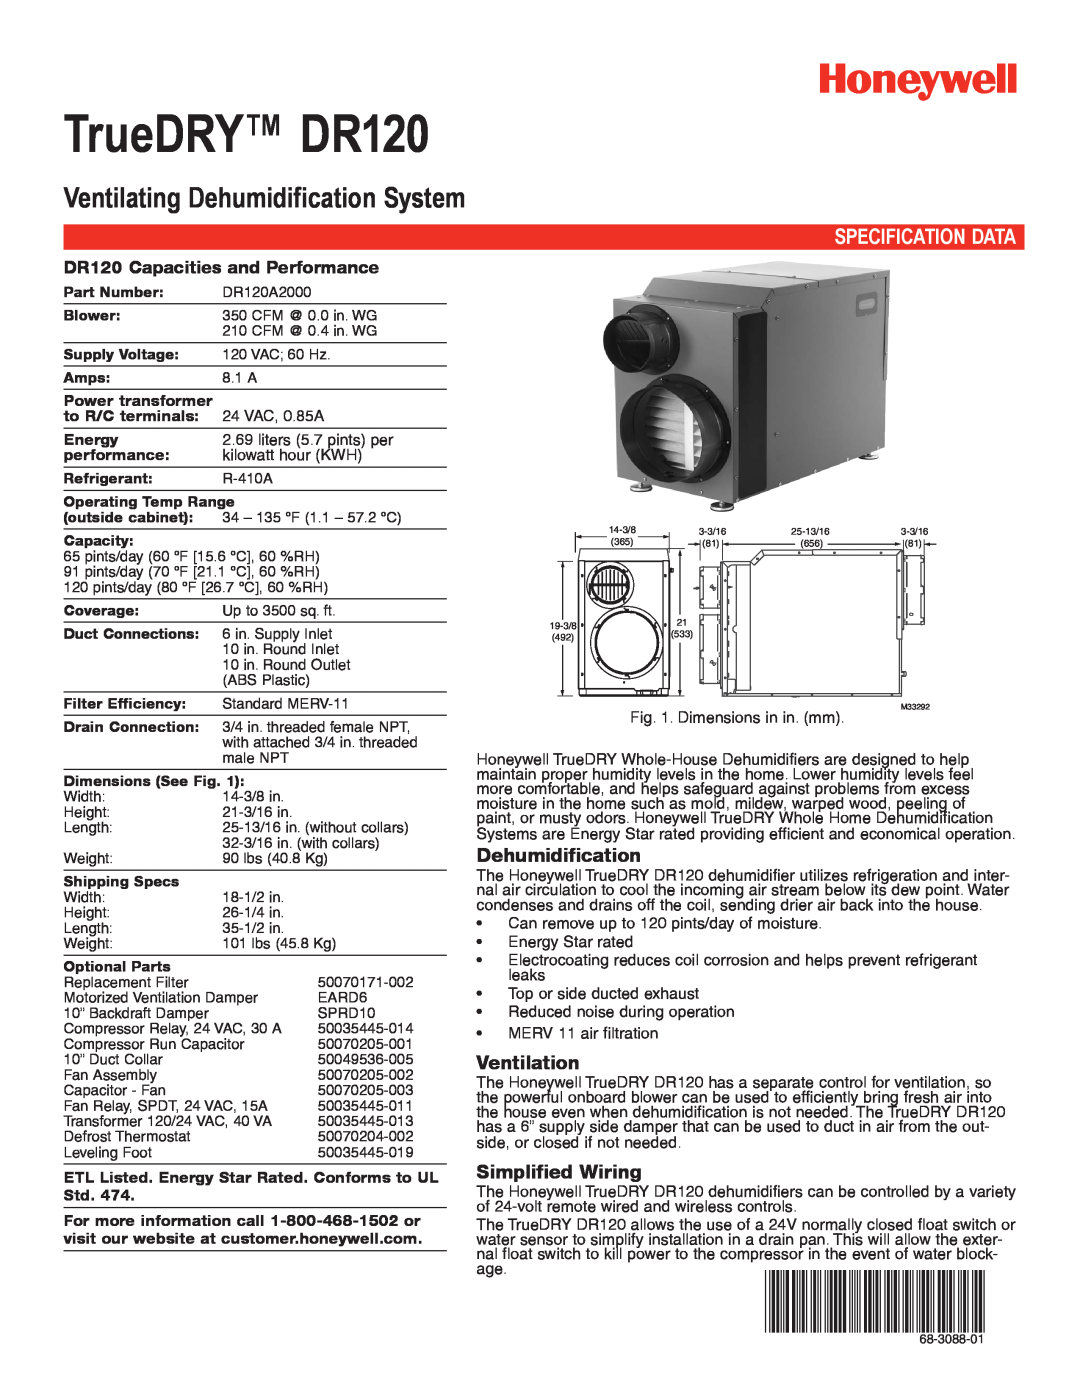 Honeywell dimensions TrueDRY DR120, Ventilating Dehumidification System, Specification Data, Ventilation, 24 VAC, 0.85A 